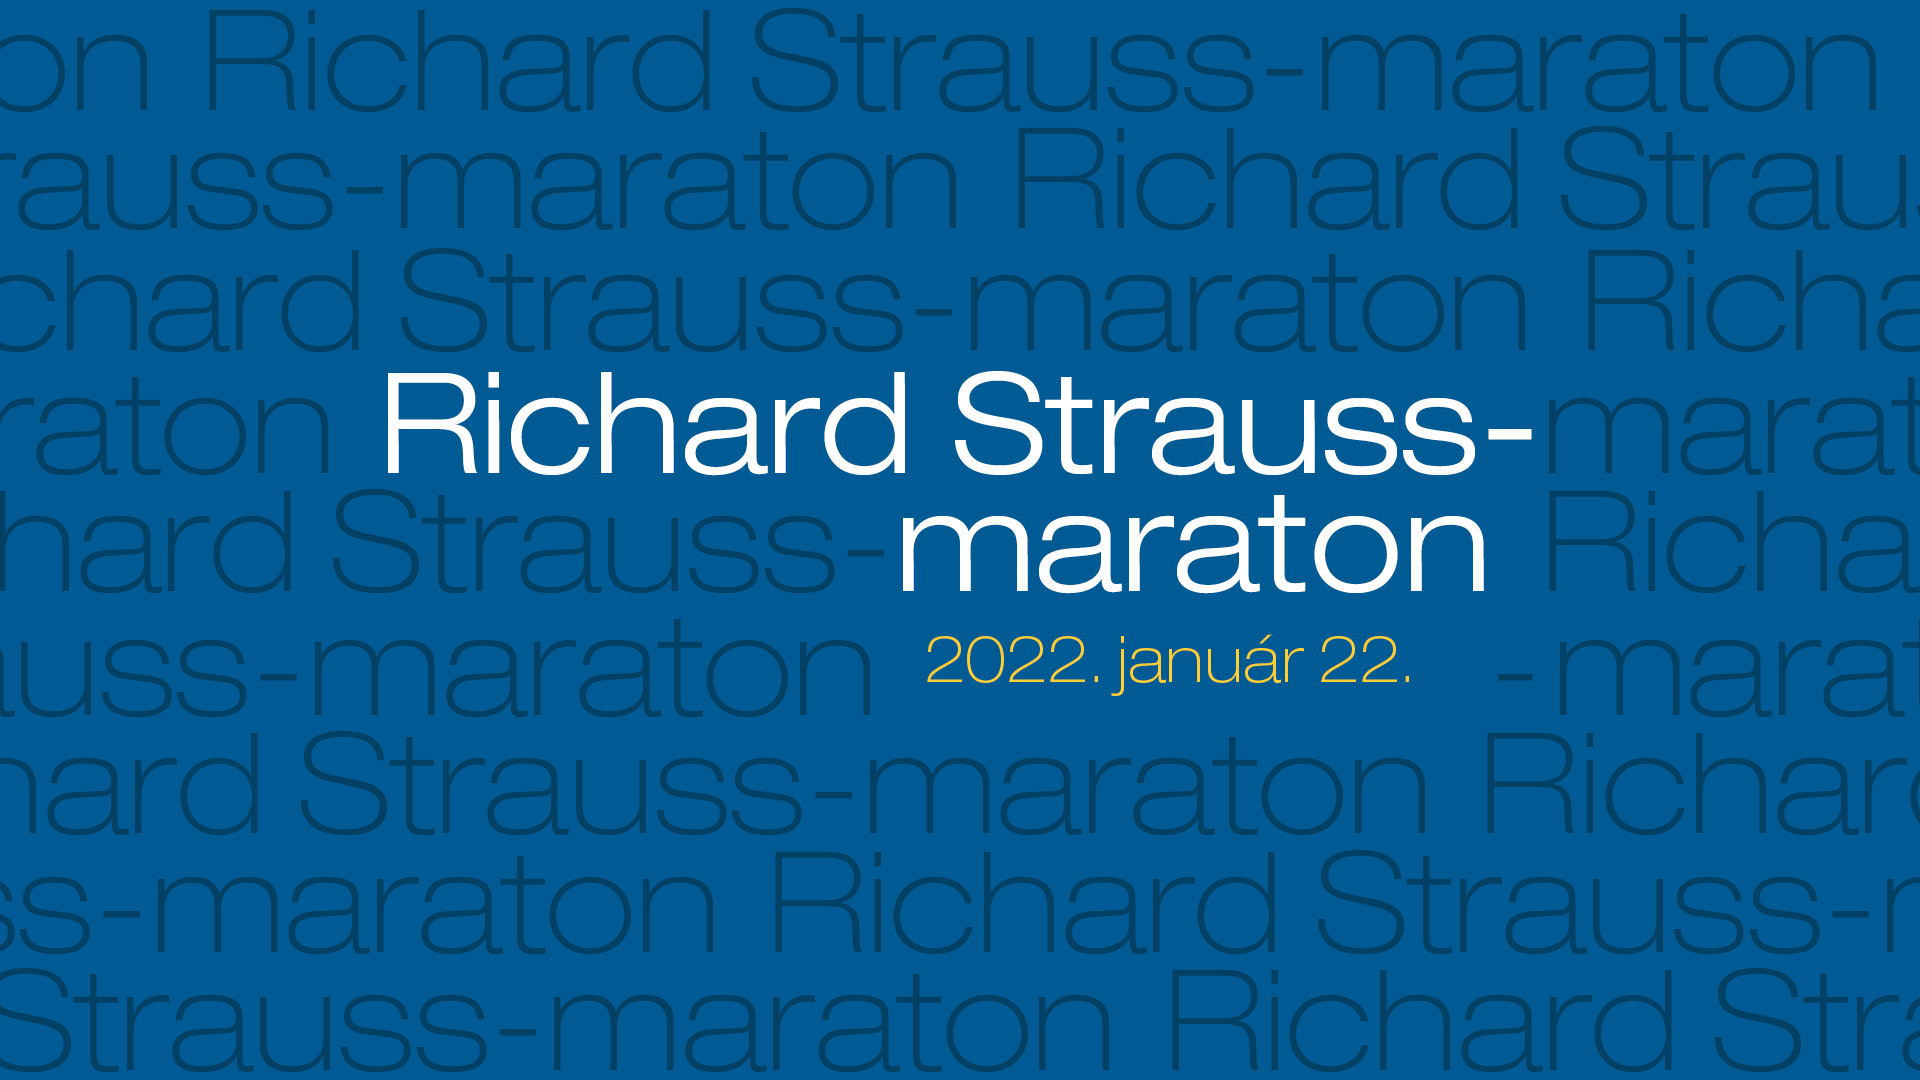 richard_strauss-maraton-fbeventcover-1920x1080px.jpg